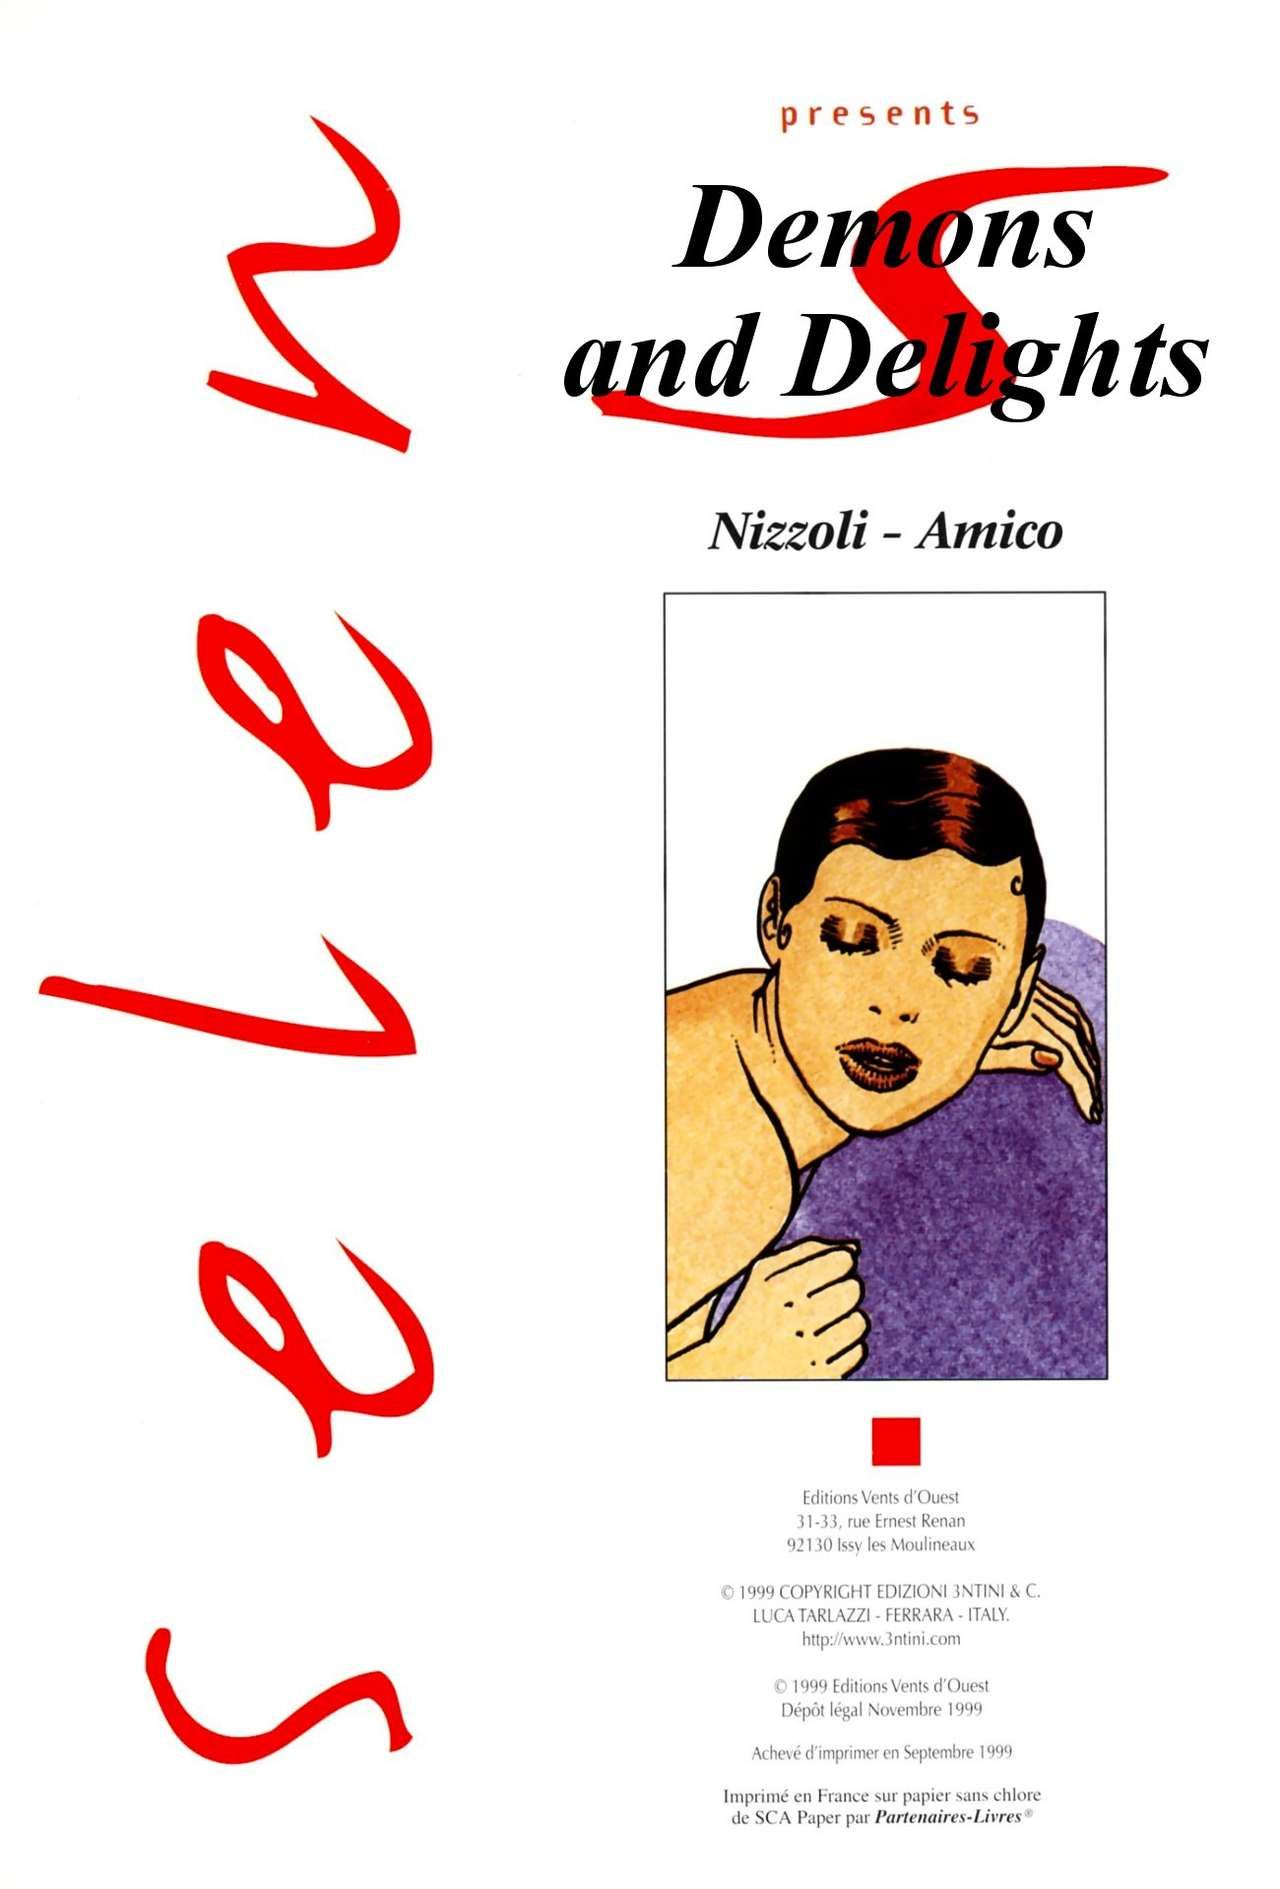 Marco Nizzoli Selen - Demons and Delights